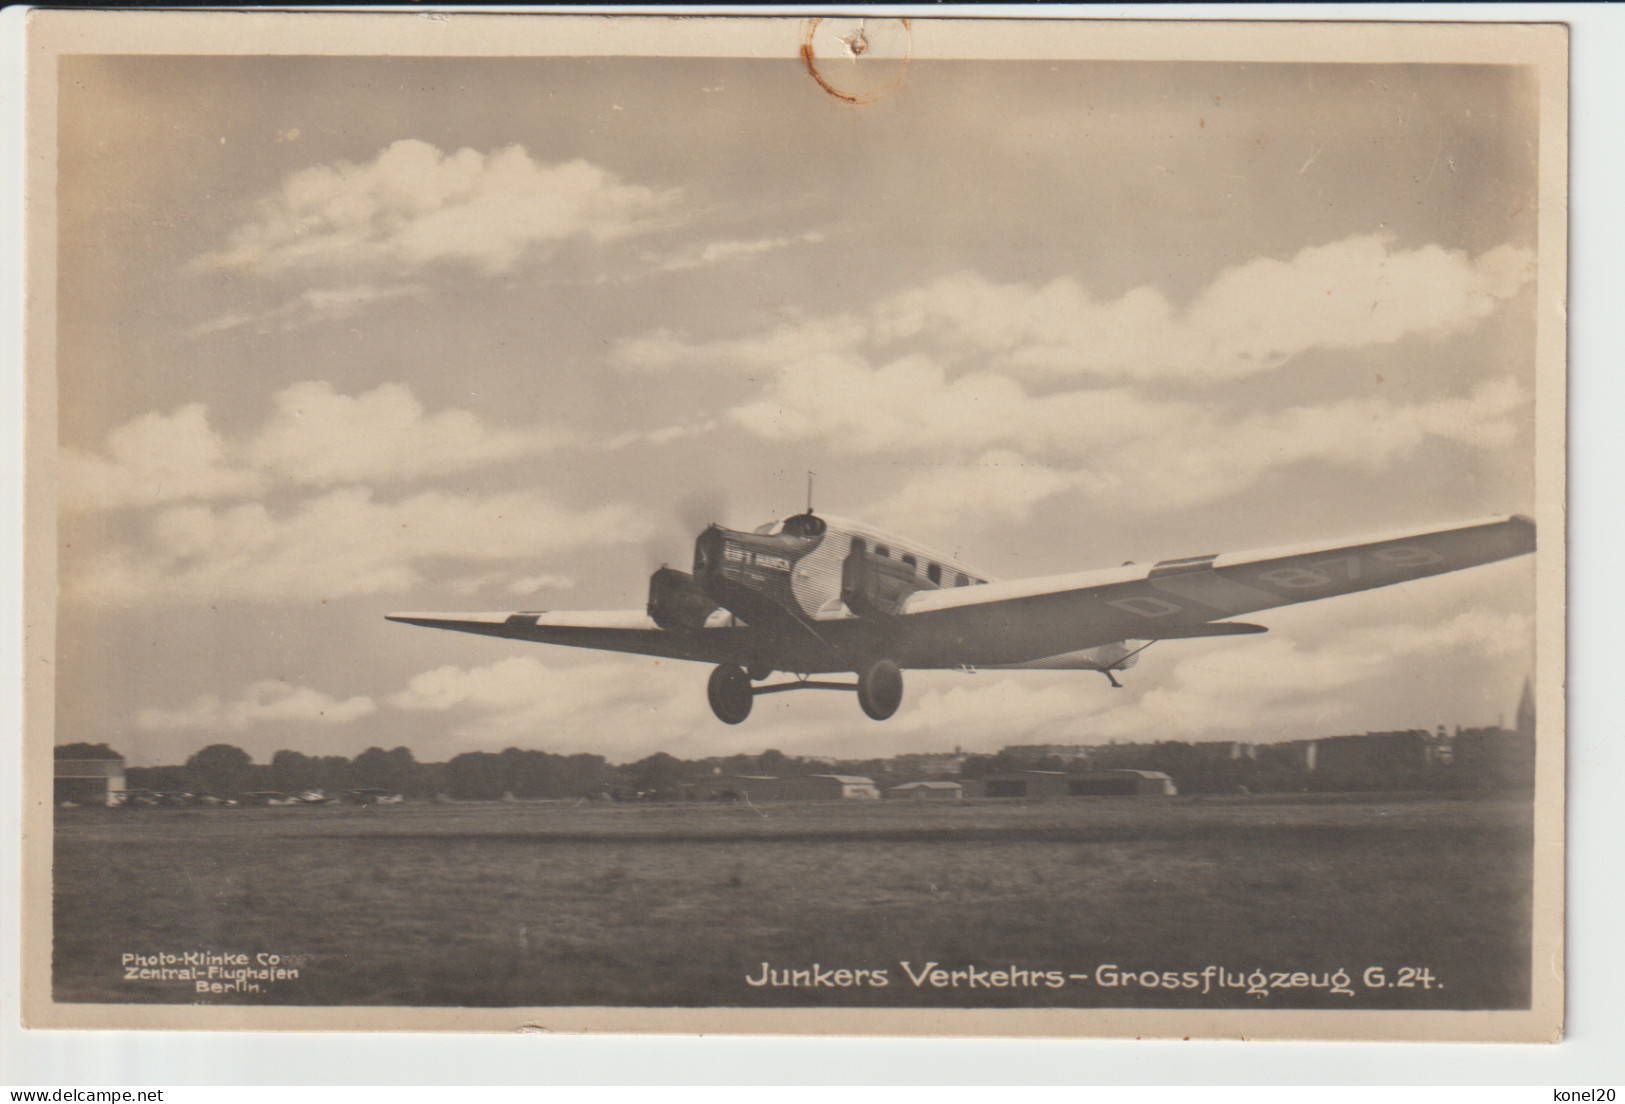 Vintage Rppc Lufthansa Verkehrflugzeug Junkers G-24 Aircraft - 1919-1938: Between Wars